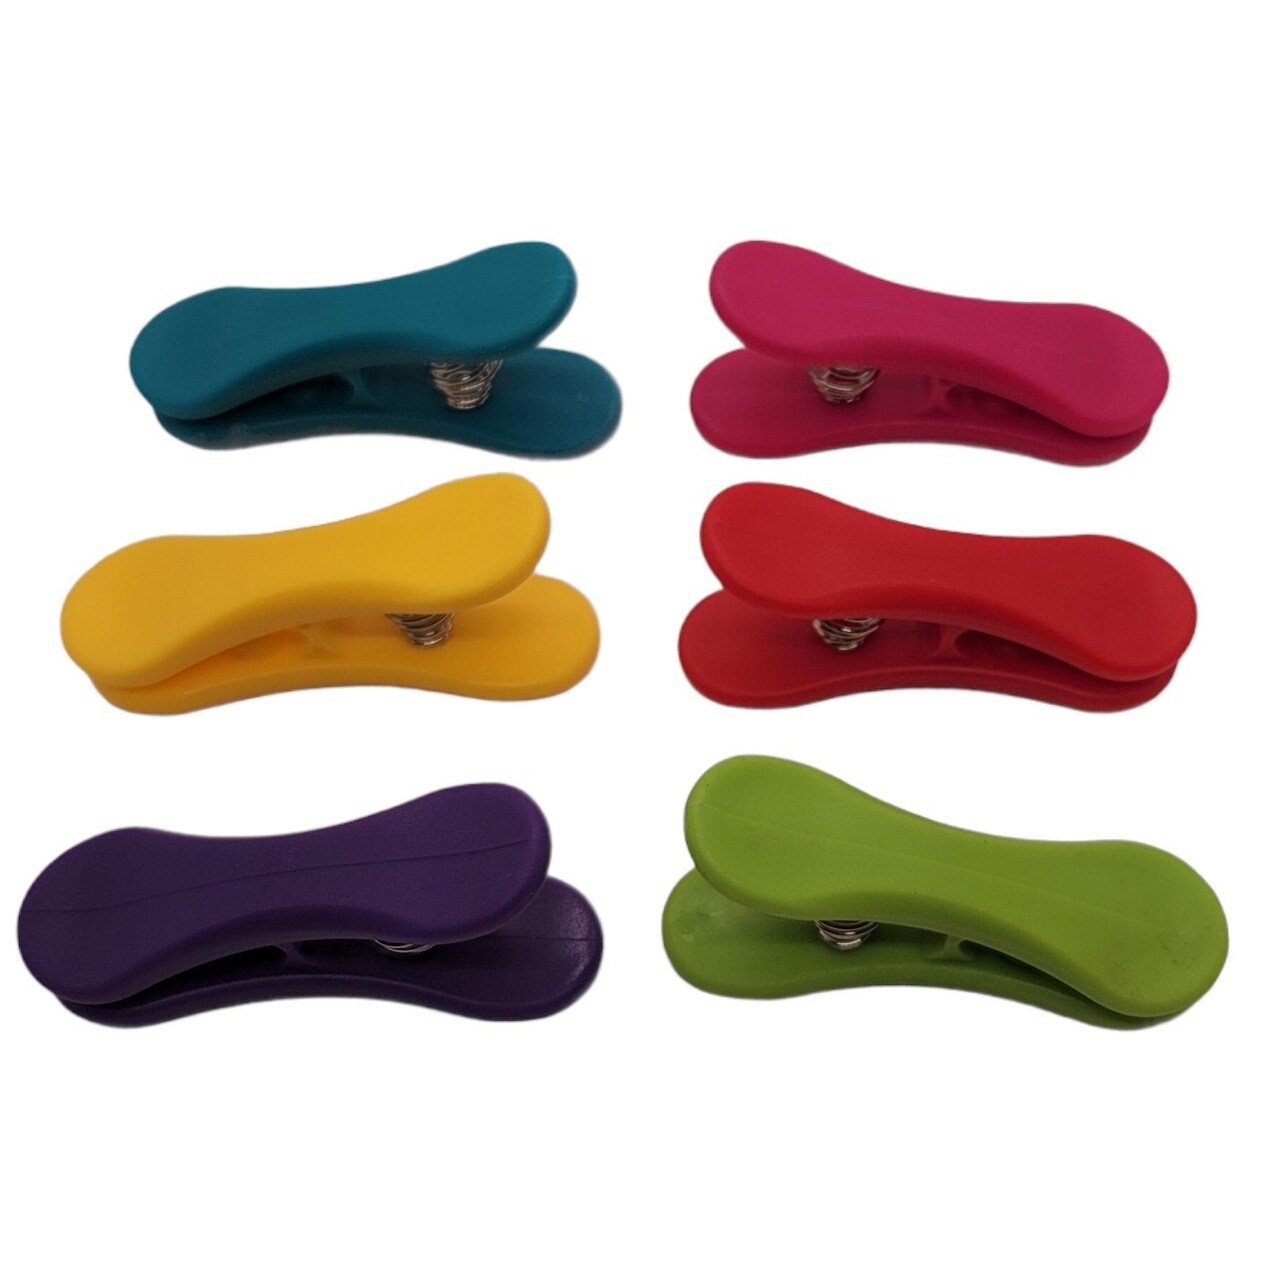 Handy Housewares 6-Piece Colorful Multi-Purpose Bag Clip Set